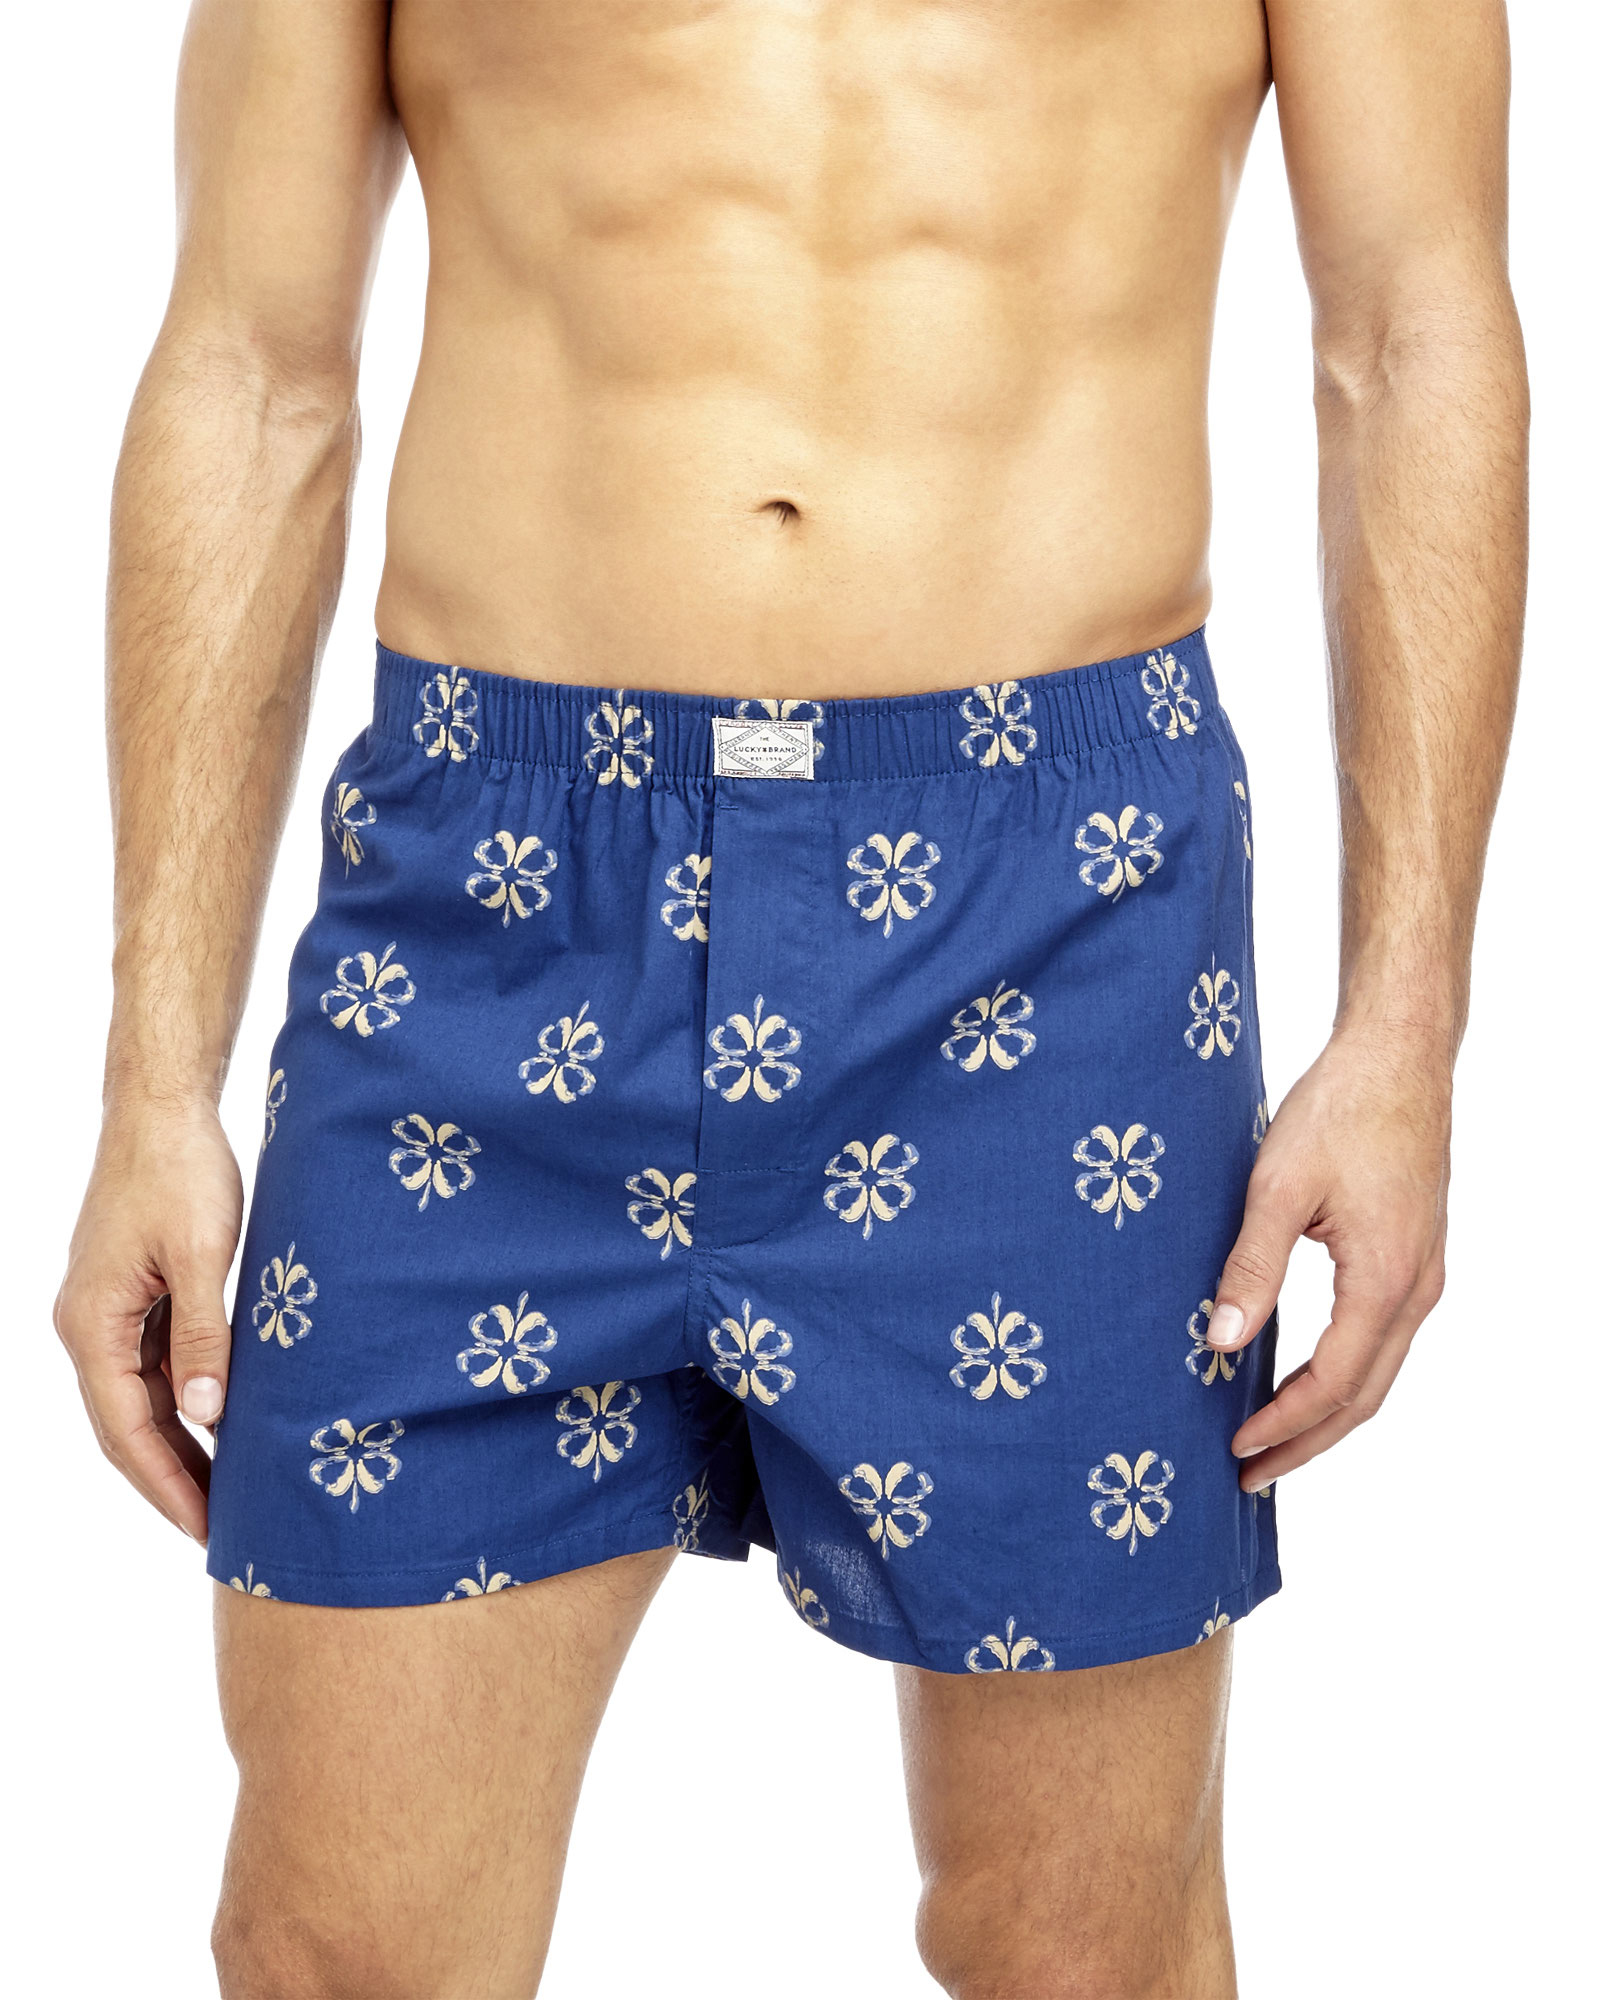 men's athletic shorts brands